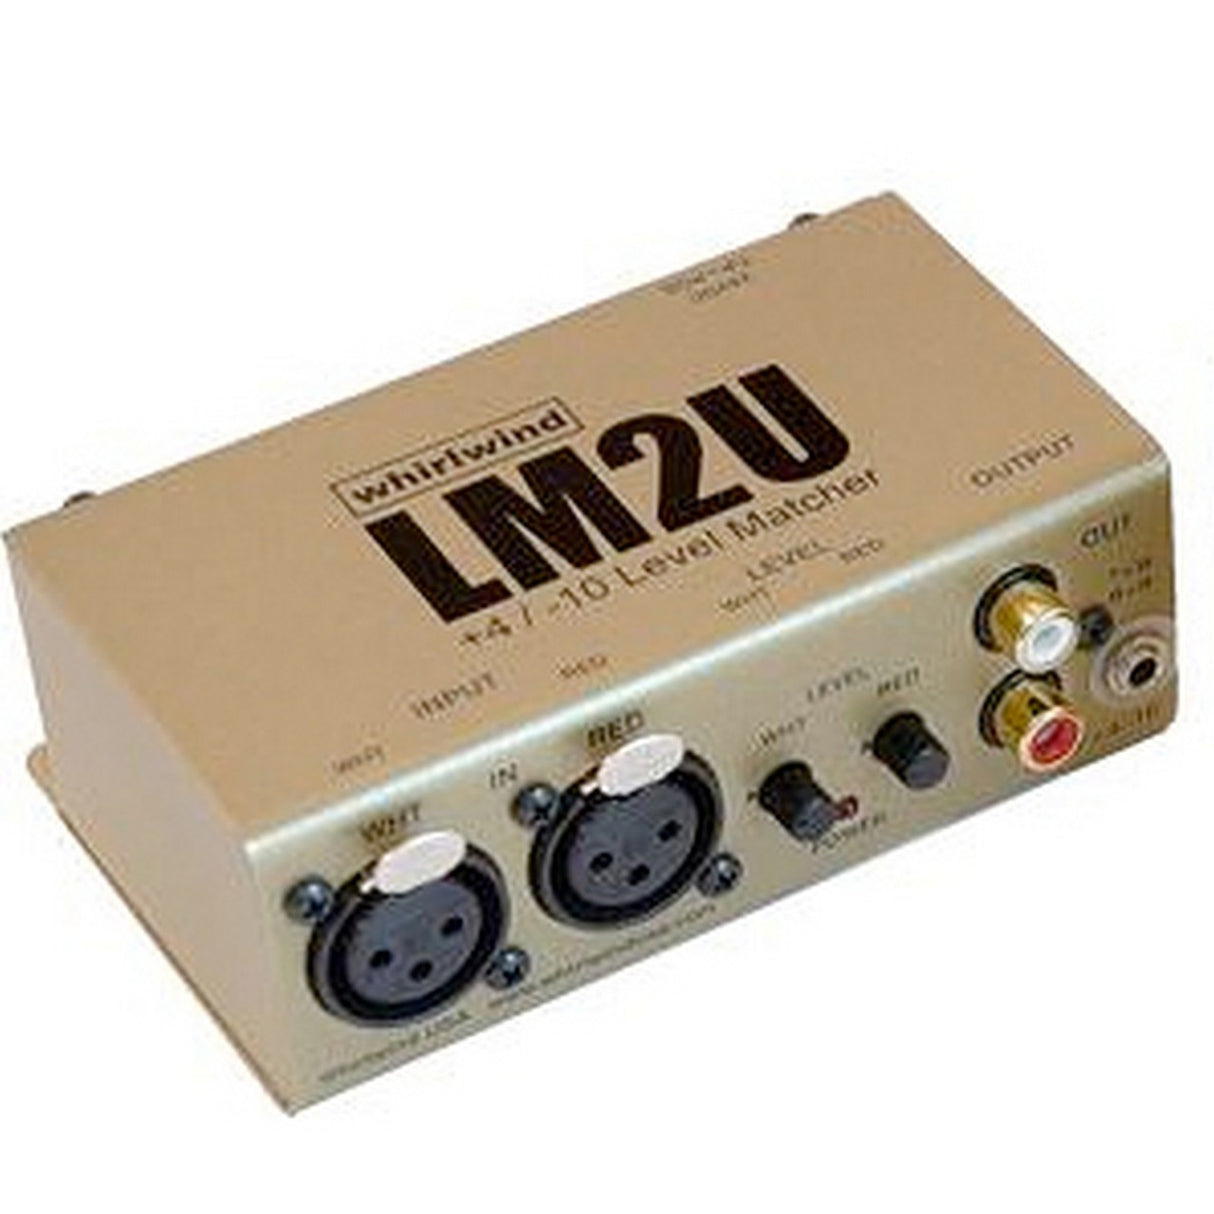 Whirlwind LM2U 2 Channels +4dB XLRF to -10dB RCA / mini TRS Converter (Used)